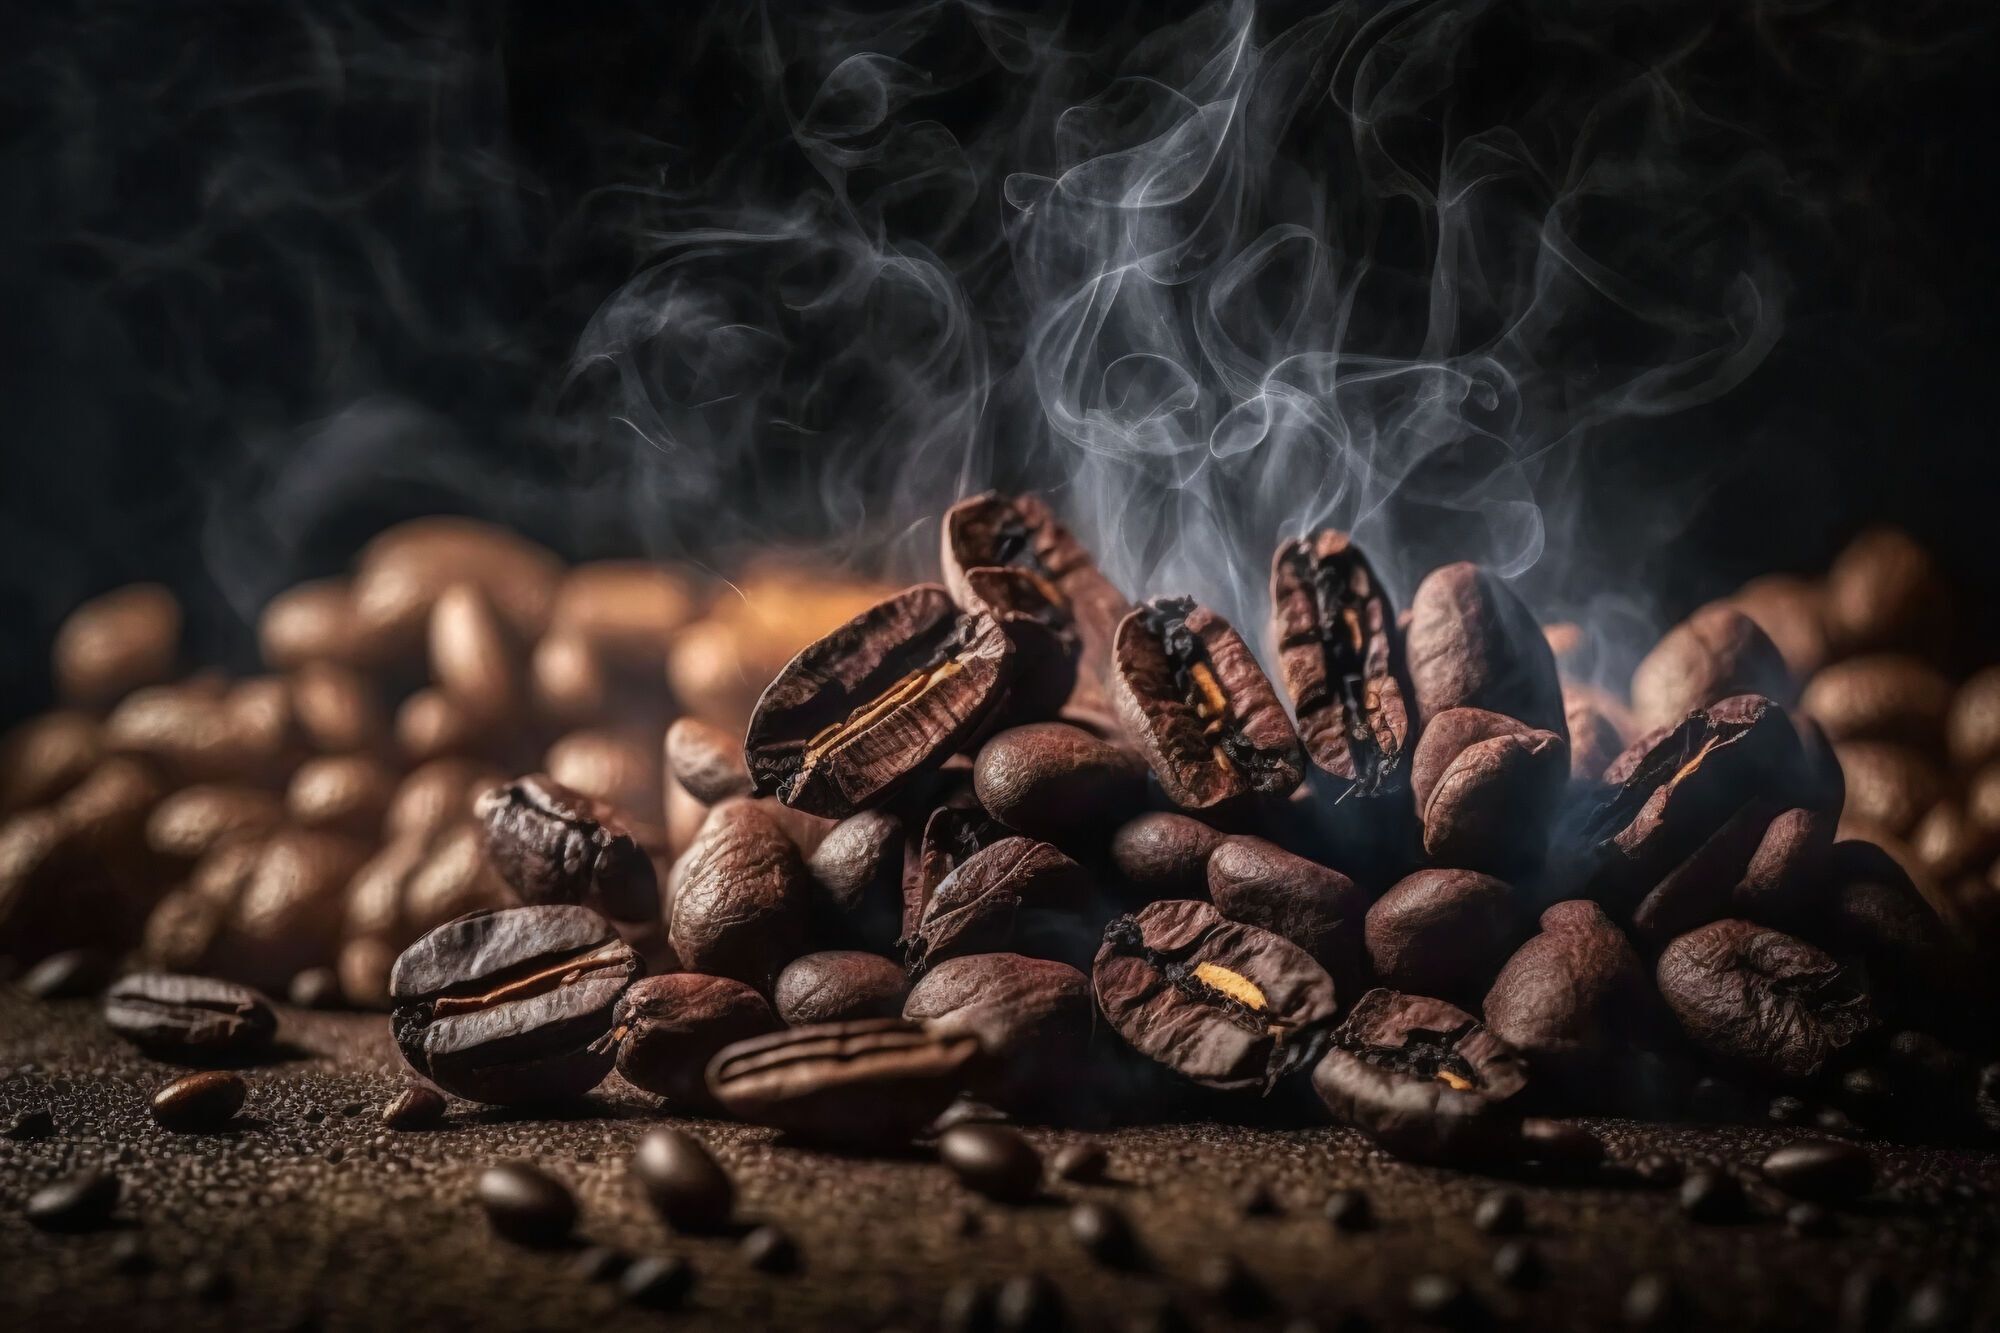 A secret ingredient that will make ground coffee taste much better is named